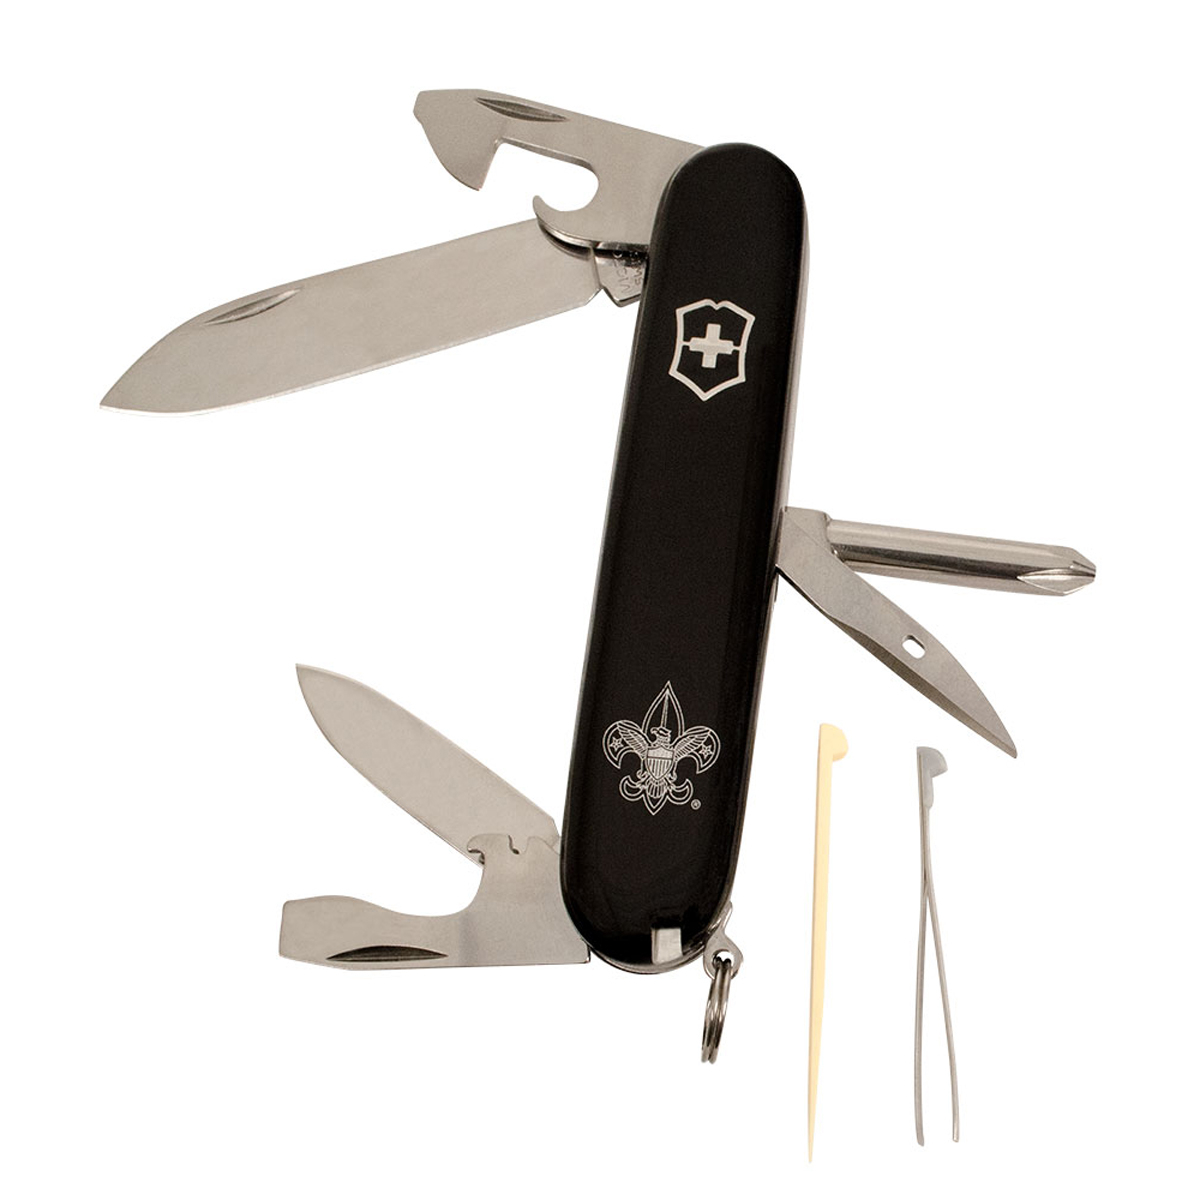 Swiss Army Tinker BSA Pocket Knife, 3 Blade - 12 Function Pocket